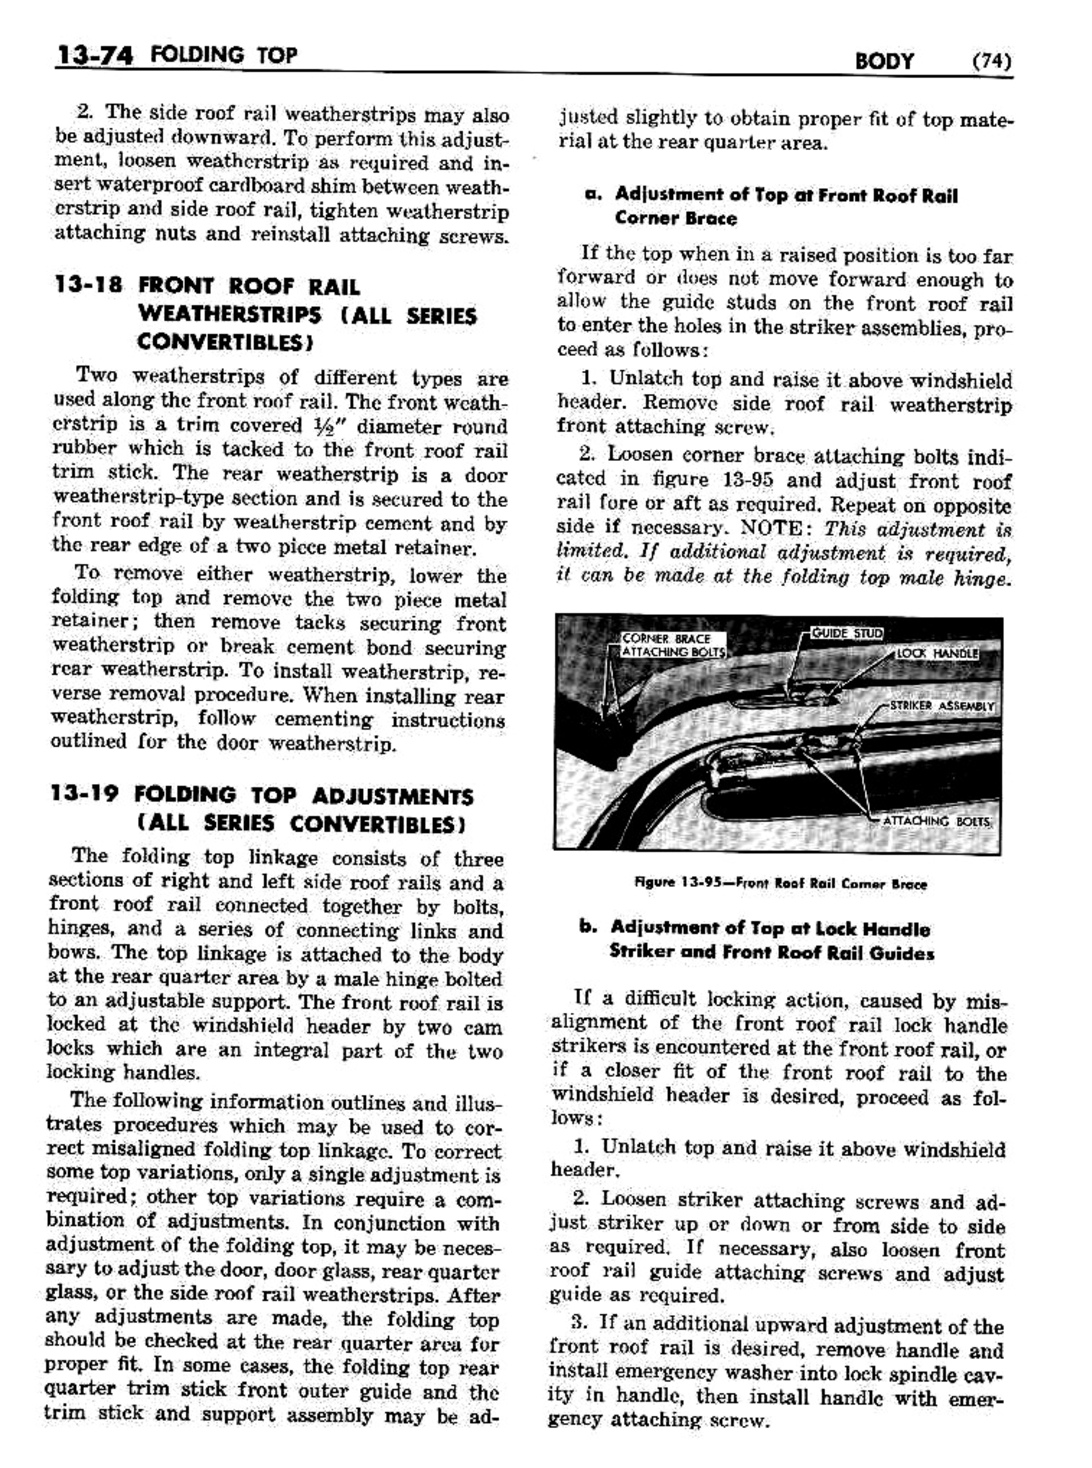 n_1958 Buick Body Service Manual-075-075.jpg